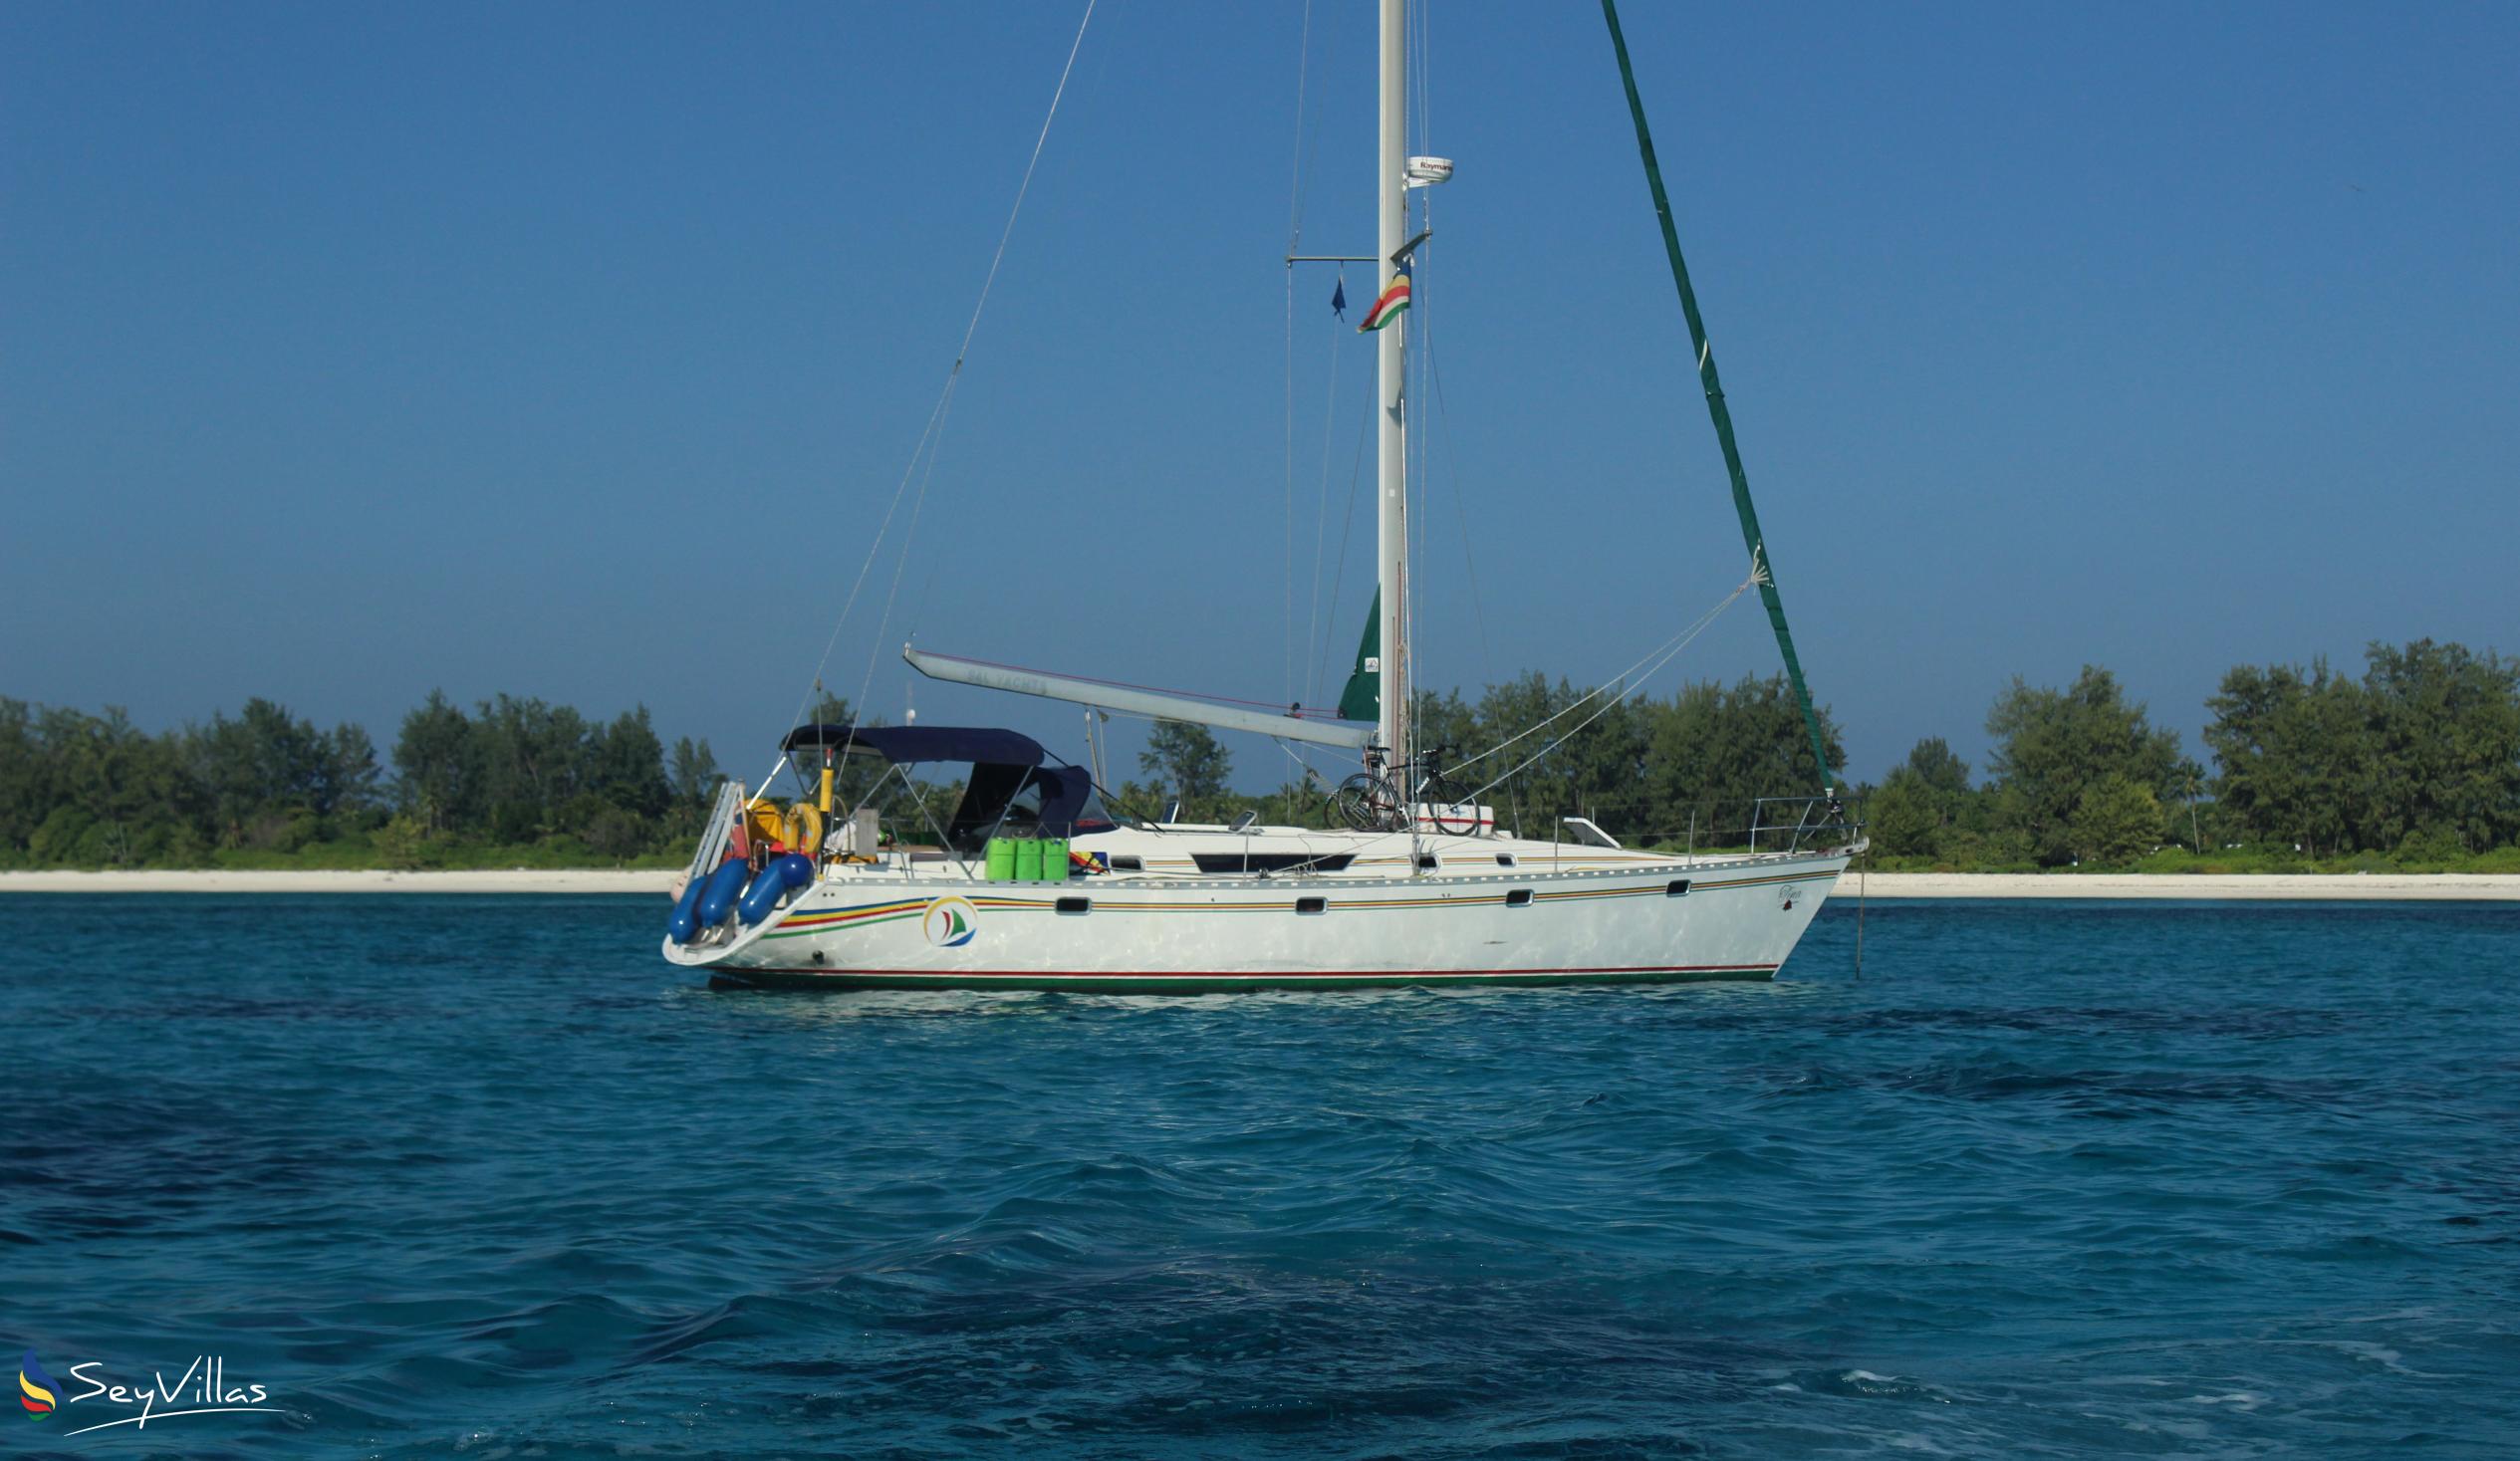 Foto 3: Seyscapes Yacht Charter - Extérieur - Seychelles (Seychelles)